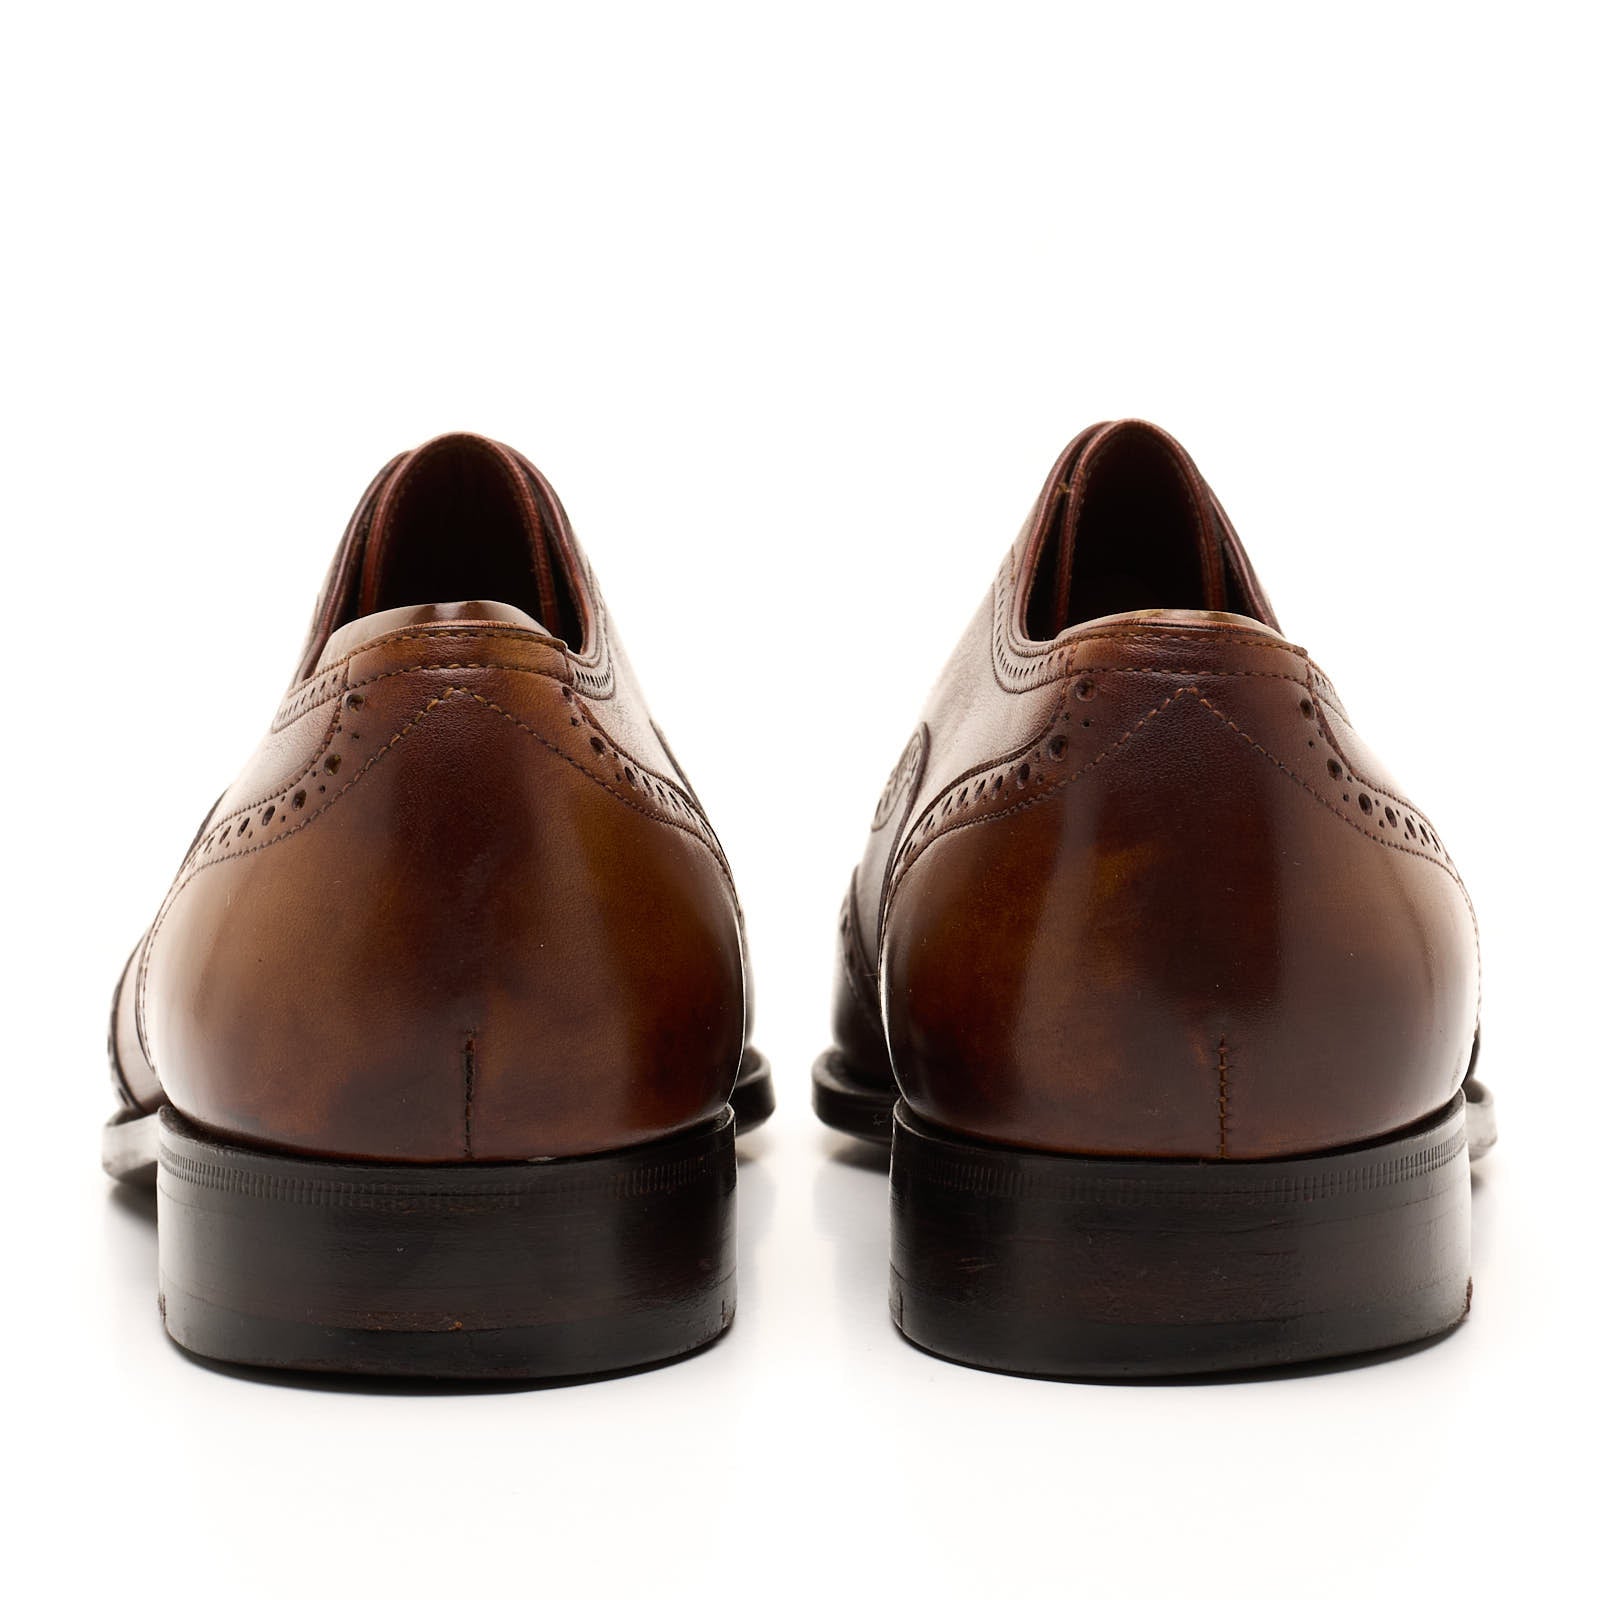 CORTHAY Paris "Vendome" Ebony Brown Calf Leather 5 Eyelet Oxford Shoes Size 7.5